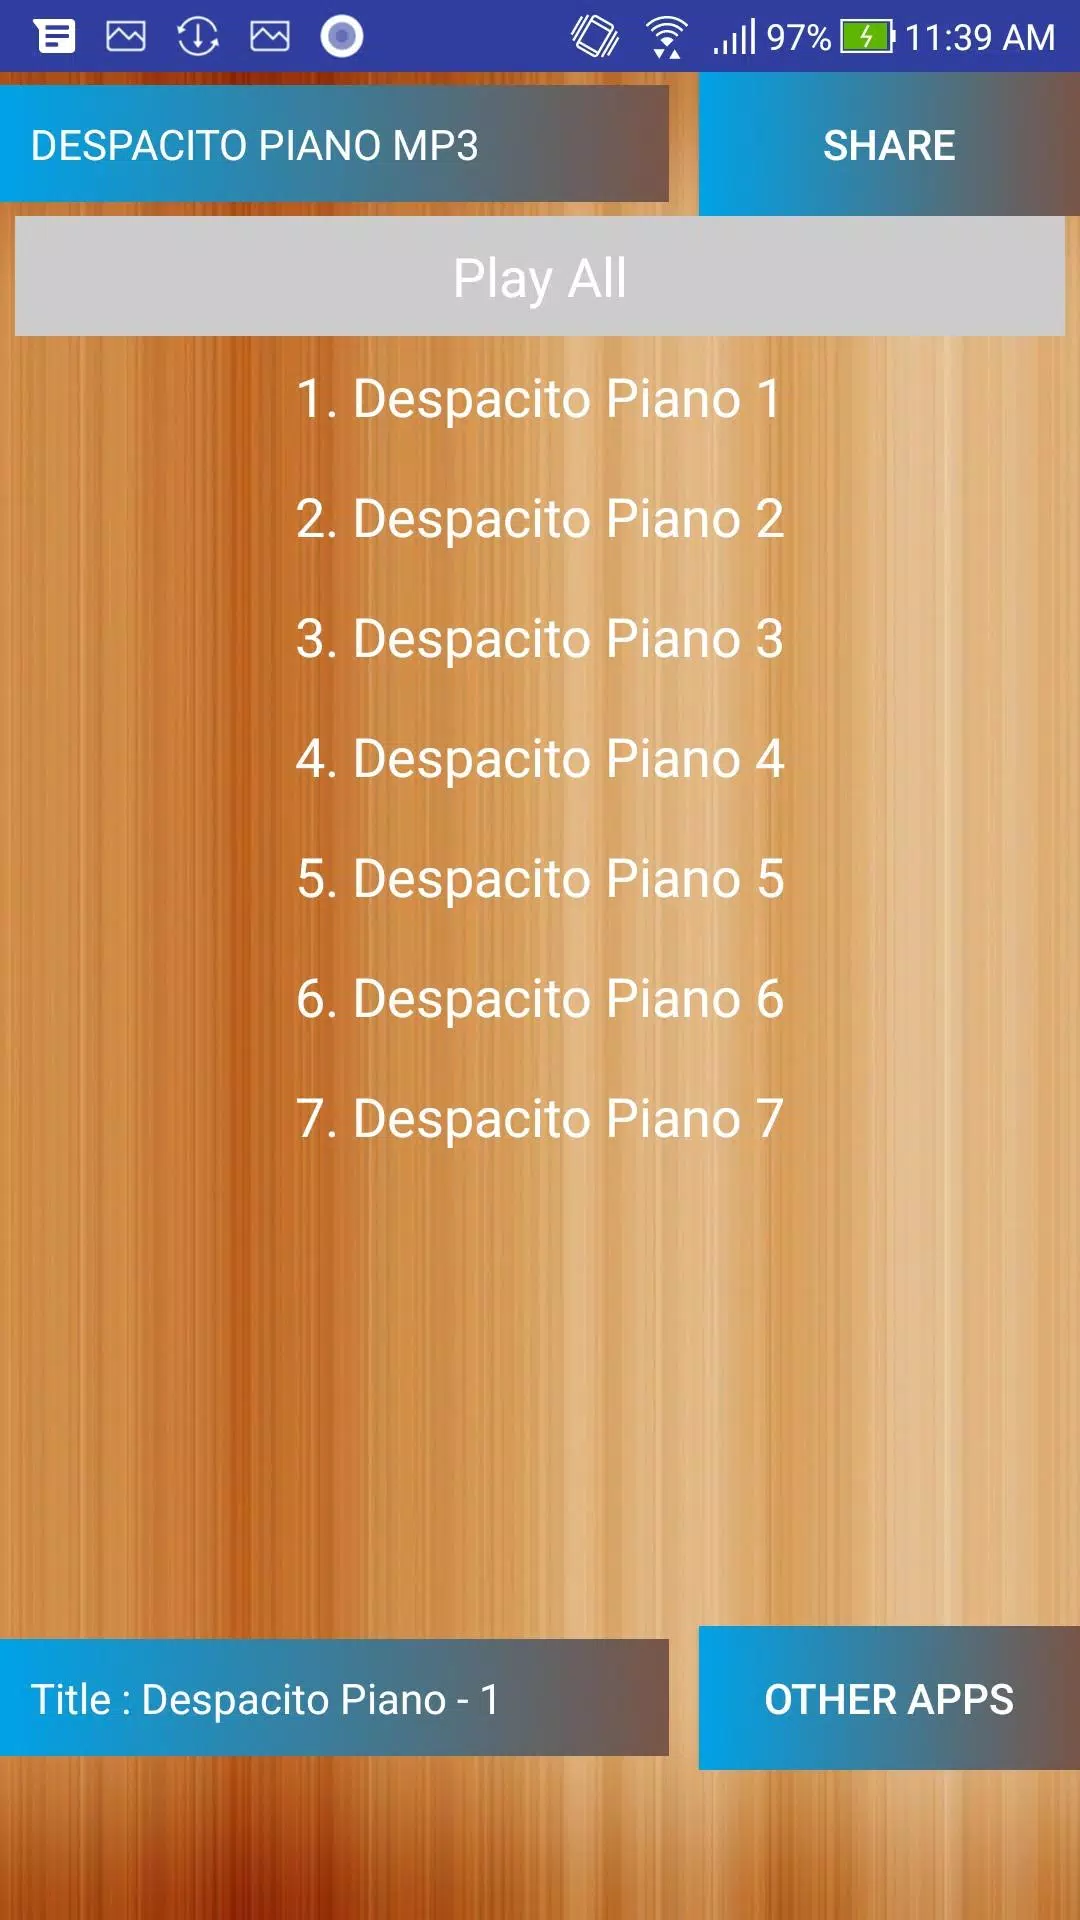 DESPACITO PIANO MP3 APK for Android Download